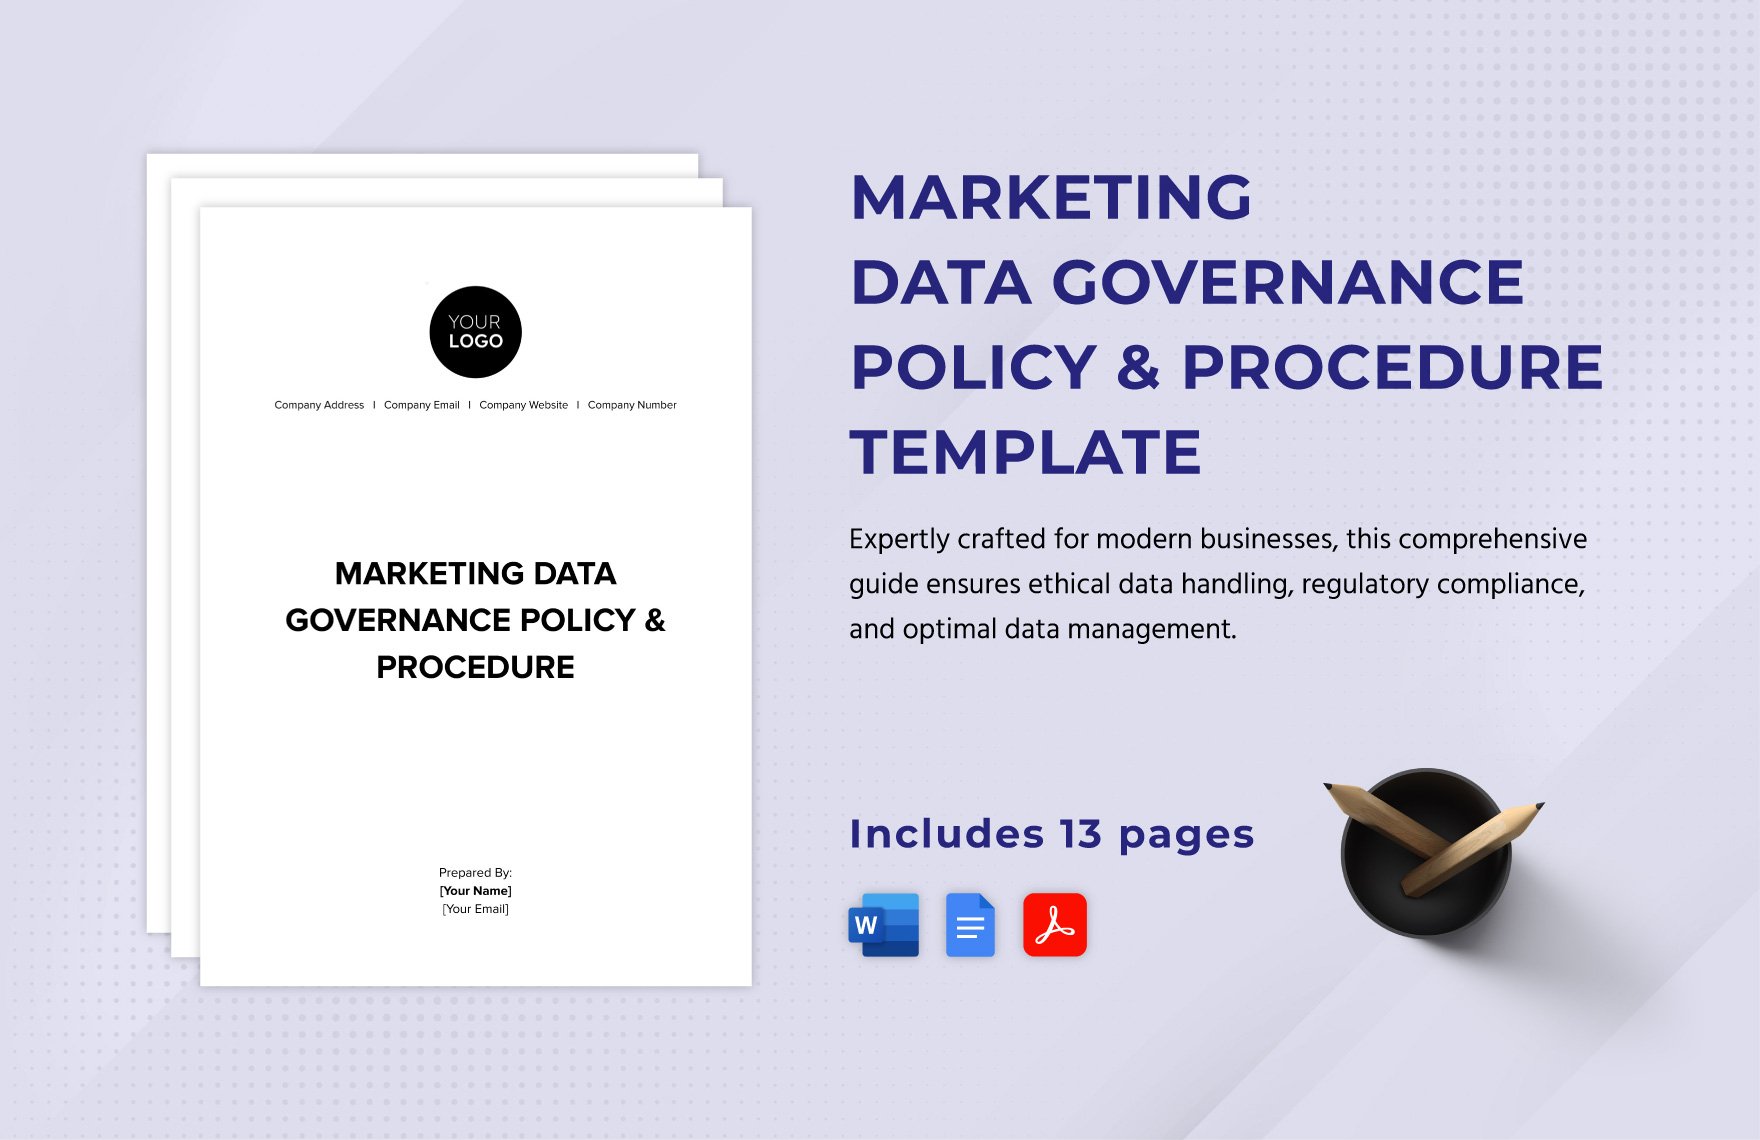 Marketing Data Governance Policy & Procedure Template